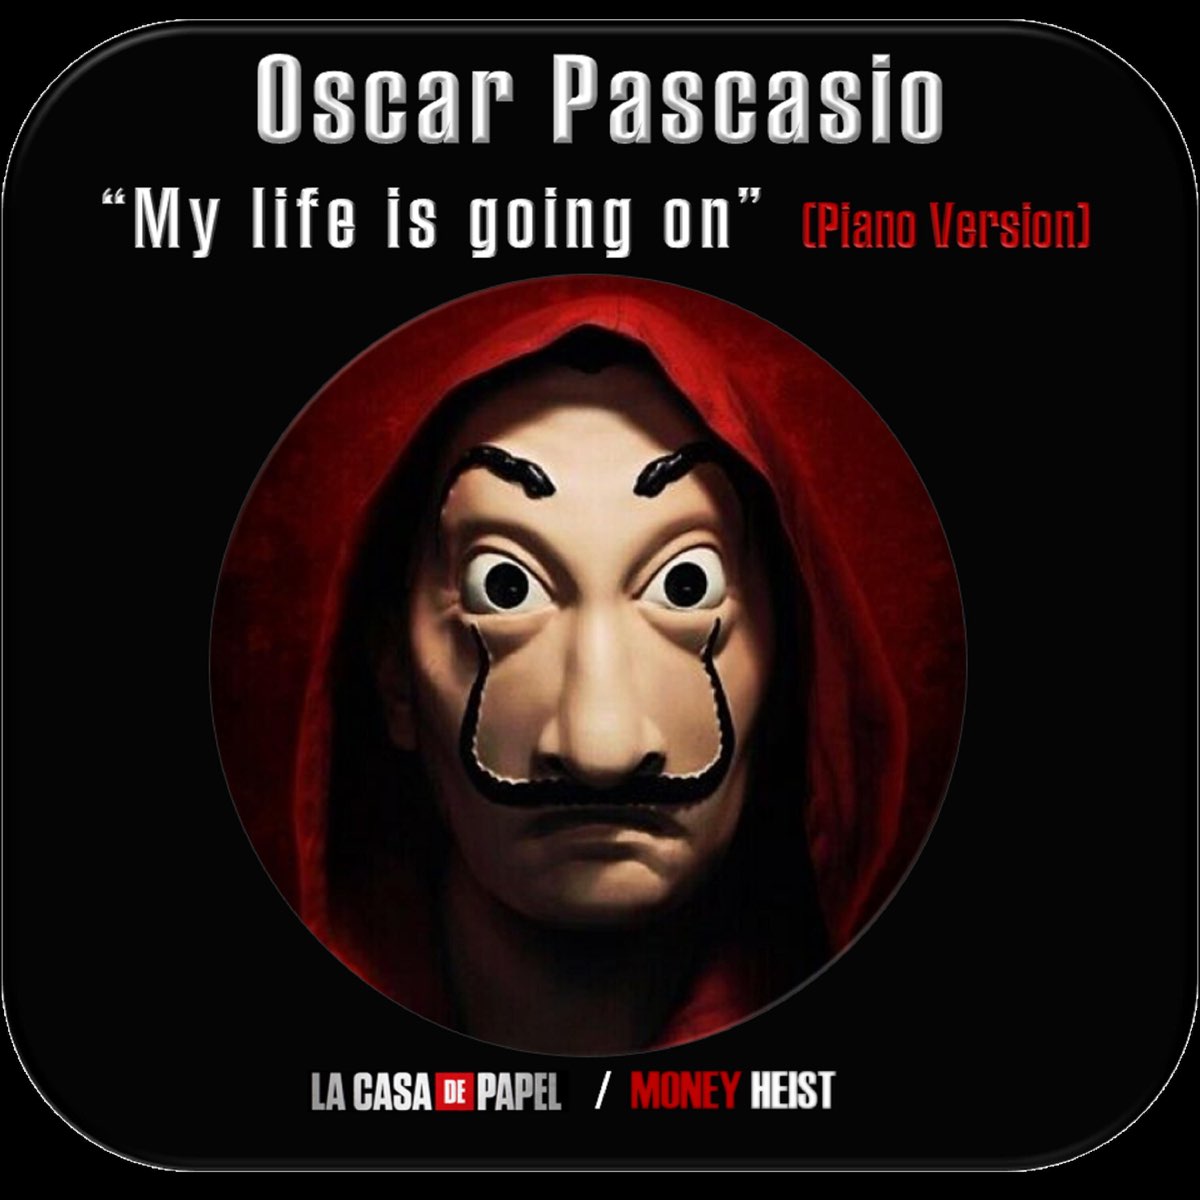 La Casa de Papel / Money Heist: My Life Is Going on (Piano Version) -  Single - Album by Oscar Pascasio - Apple Music